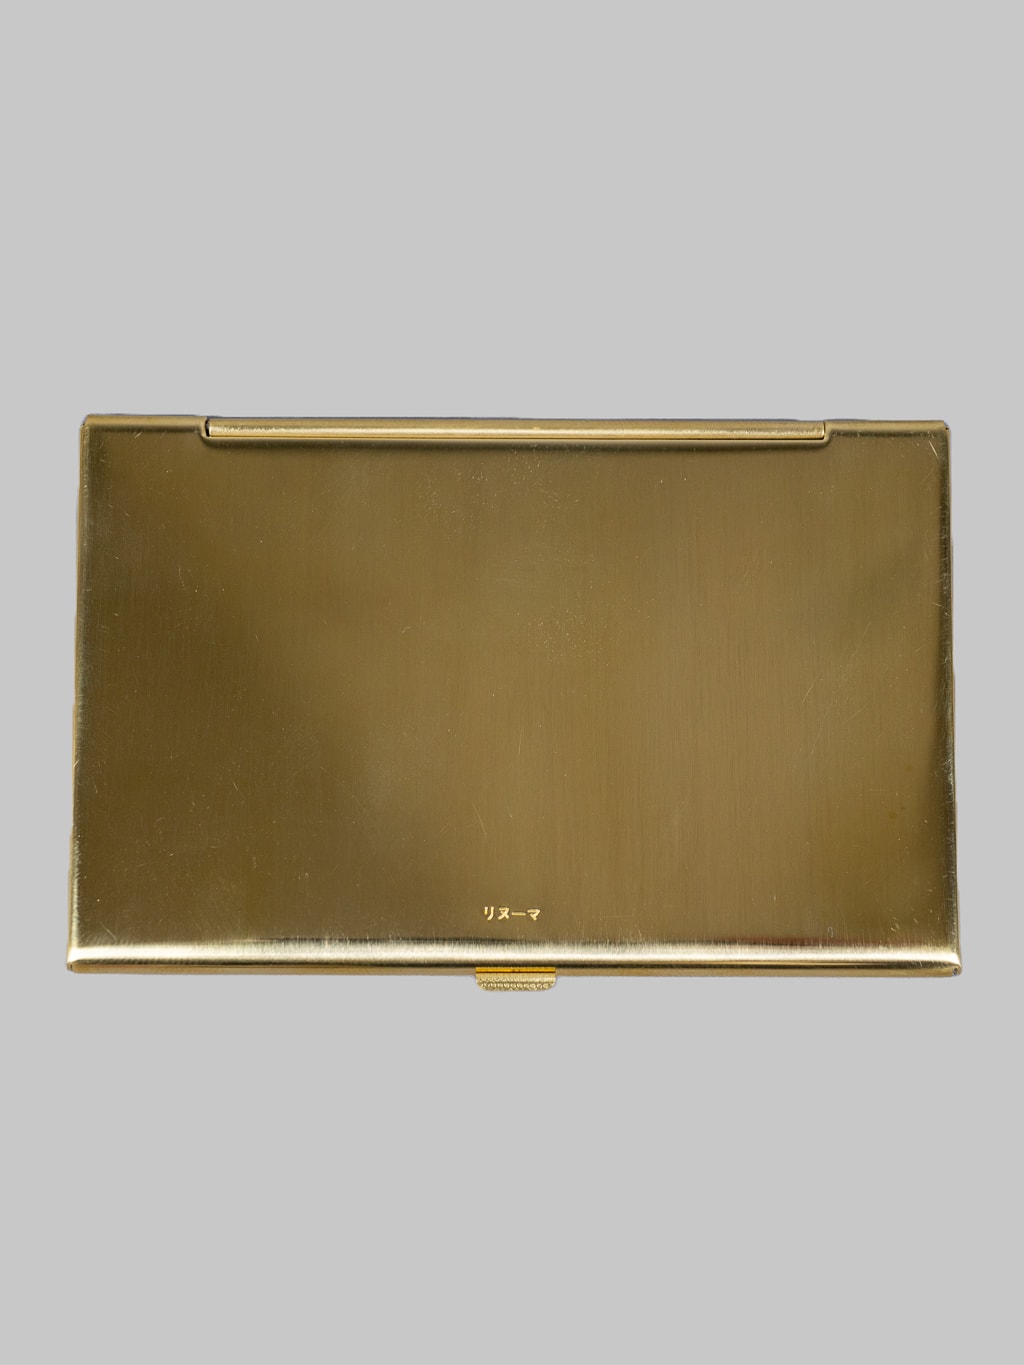 Kobashi Studio Card Case Solid Brass made in japan